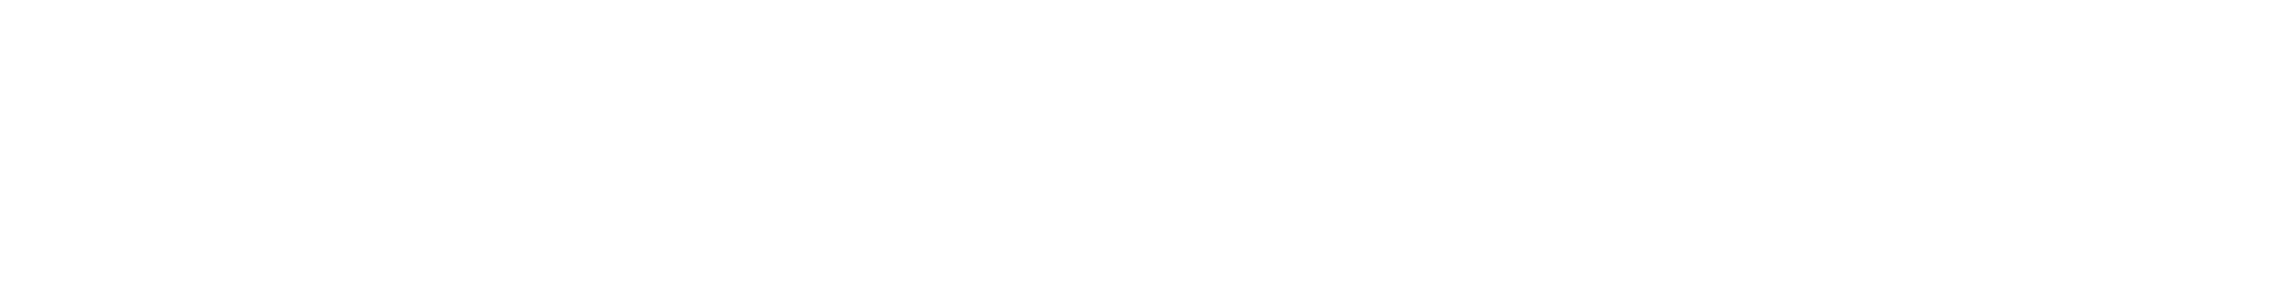 The Terri Pashley Photography logo in white